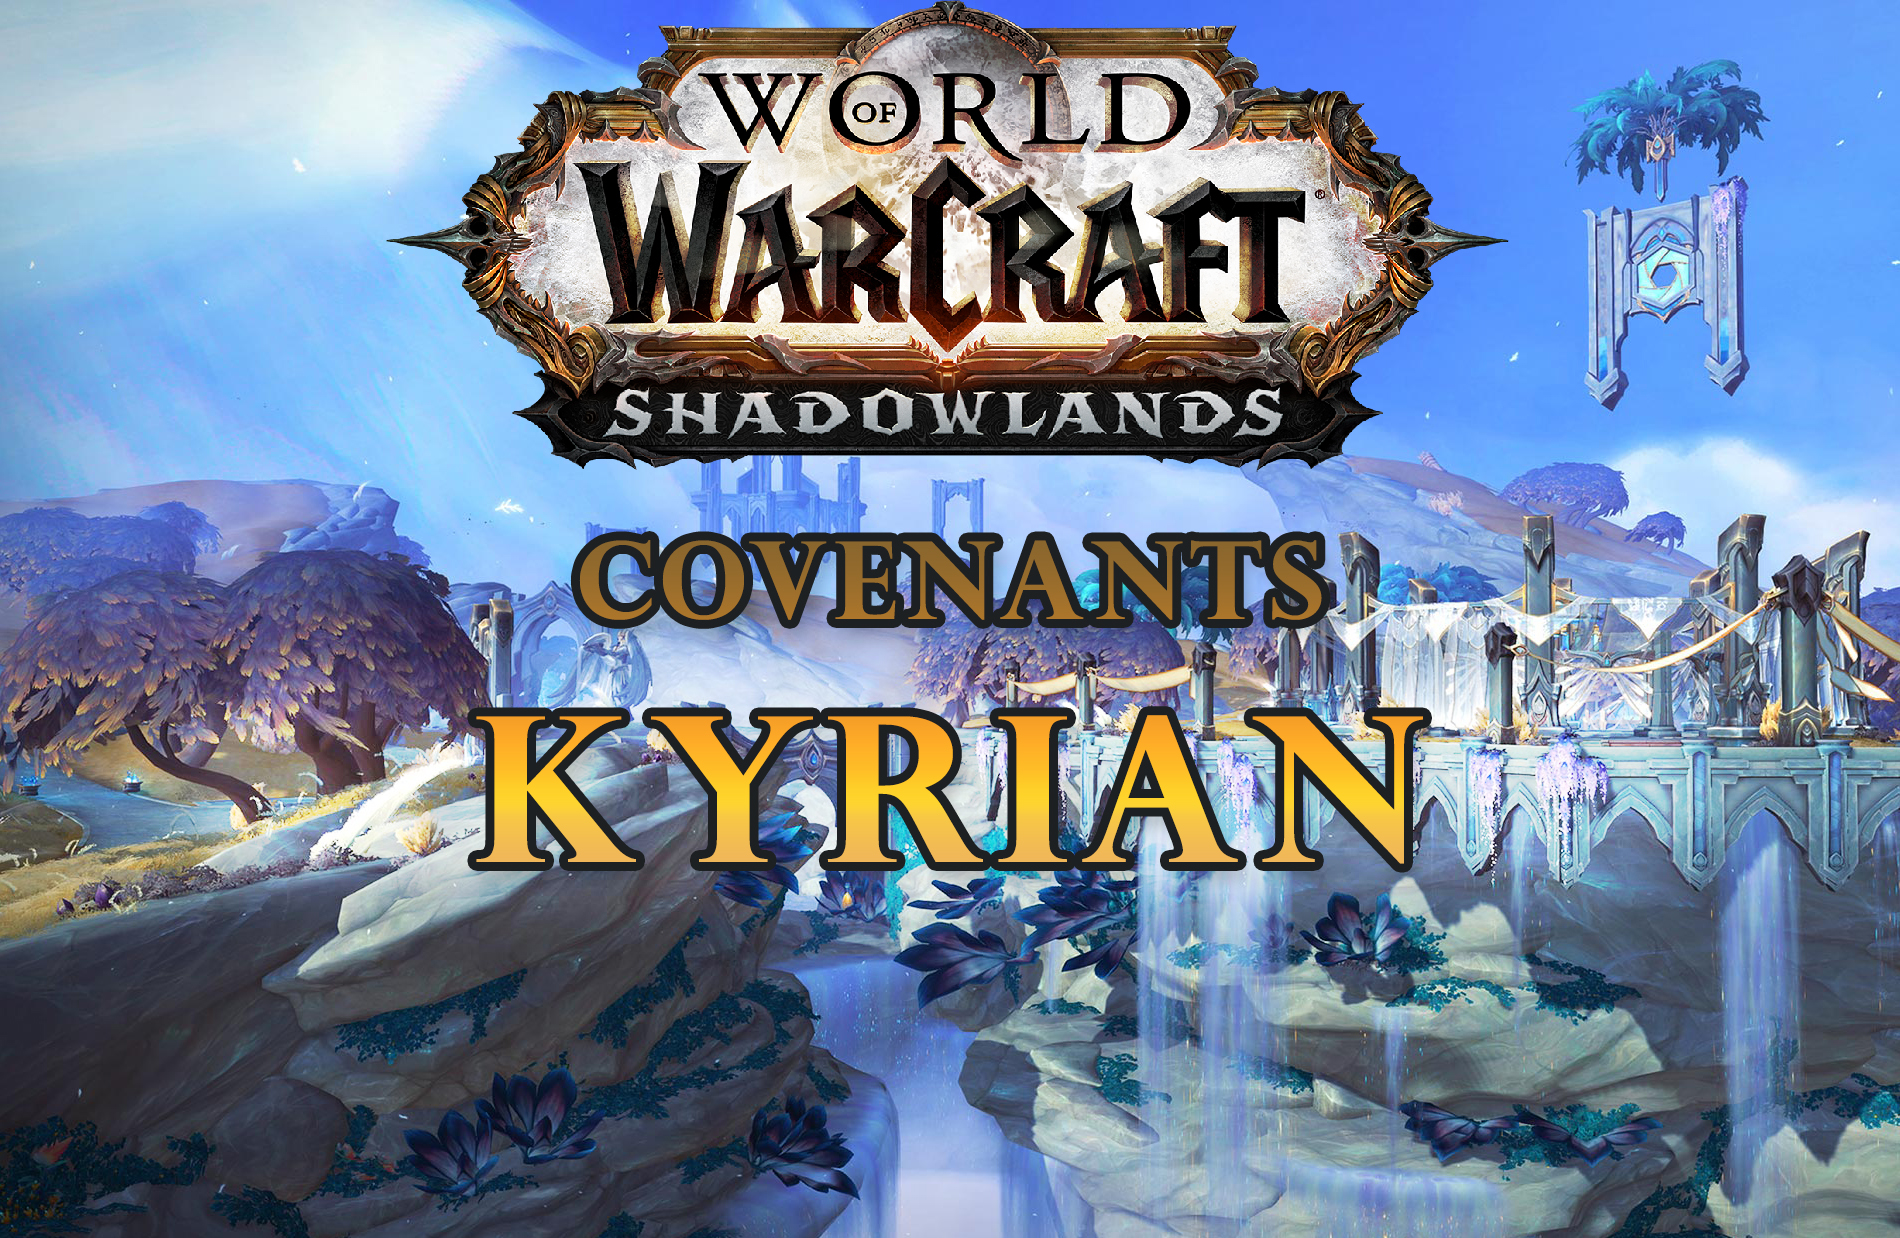 Ascended Nova - Spell - World of Warcraft